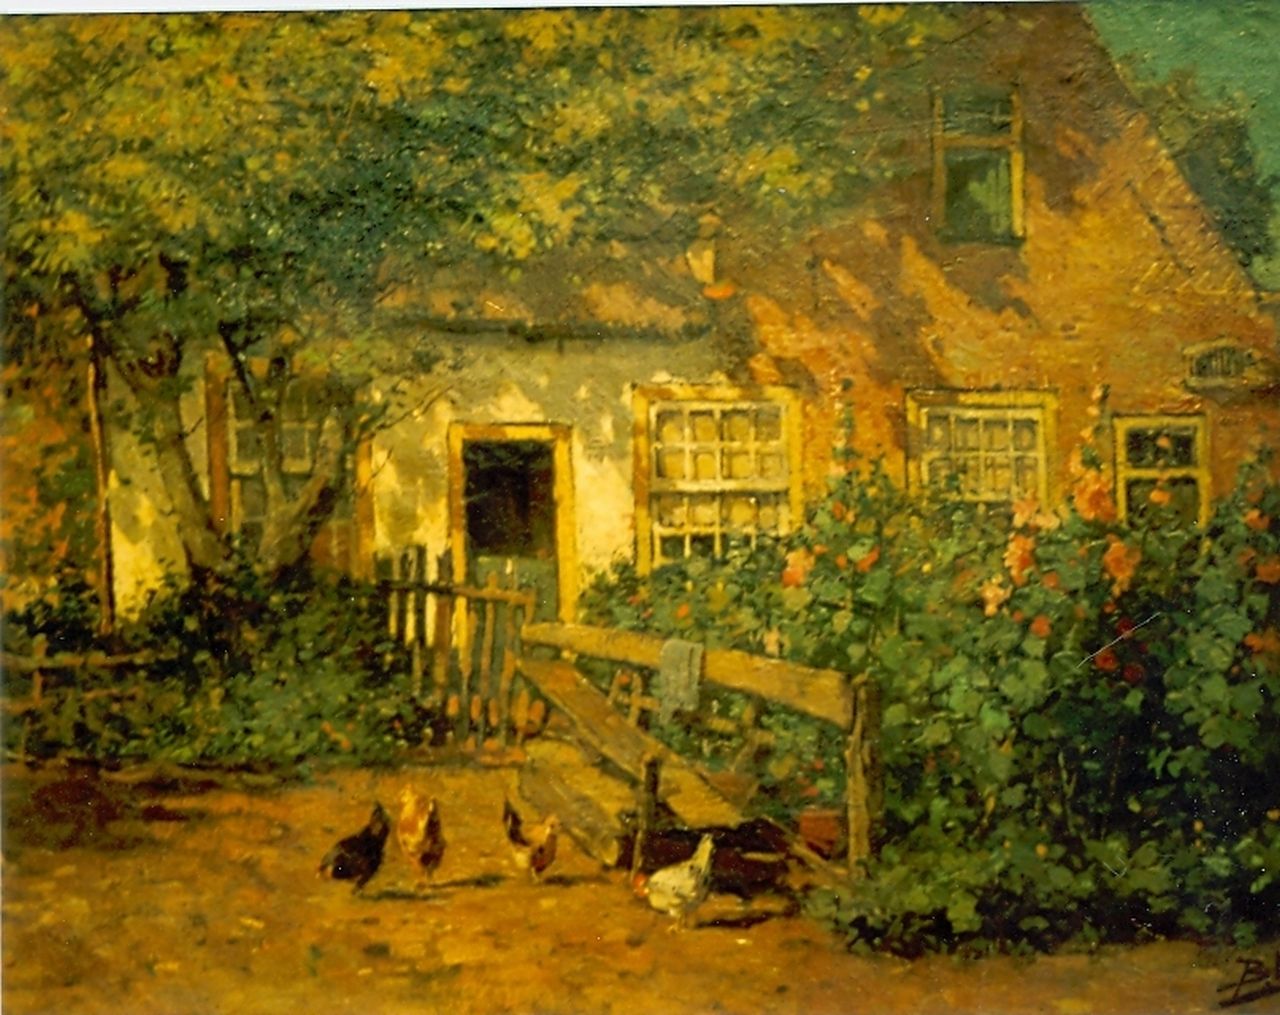 Ven P.J. van der | 'Paul' Jan van der Ven, Chickens on a yard, Öl auf Leinwand 35,5 x 55,7 cm, signed l.l.